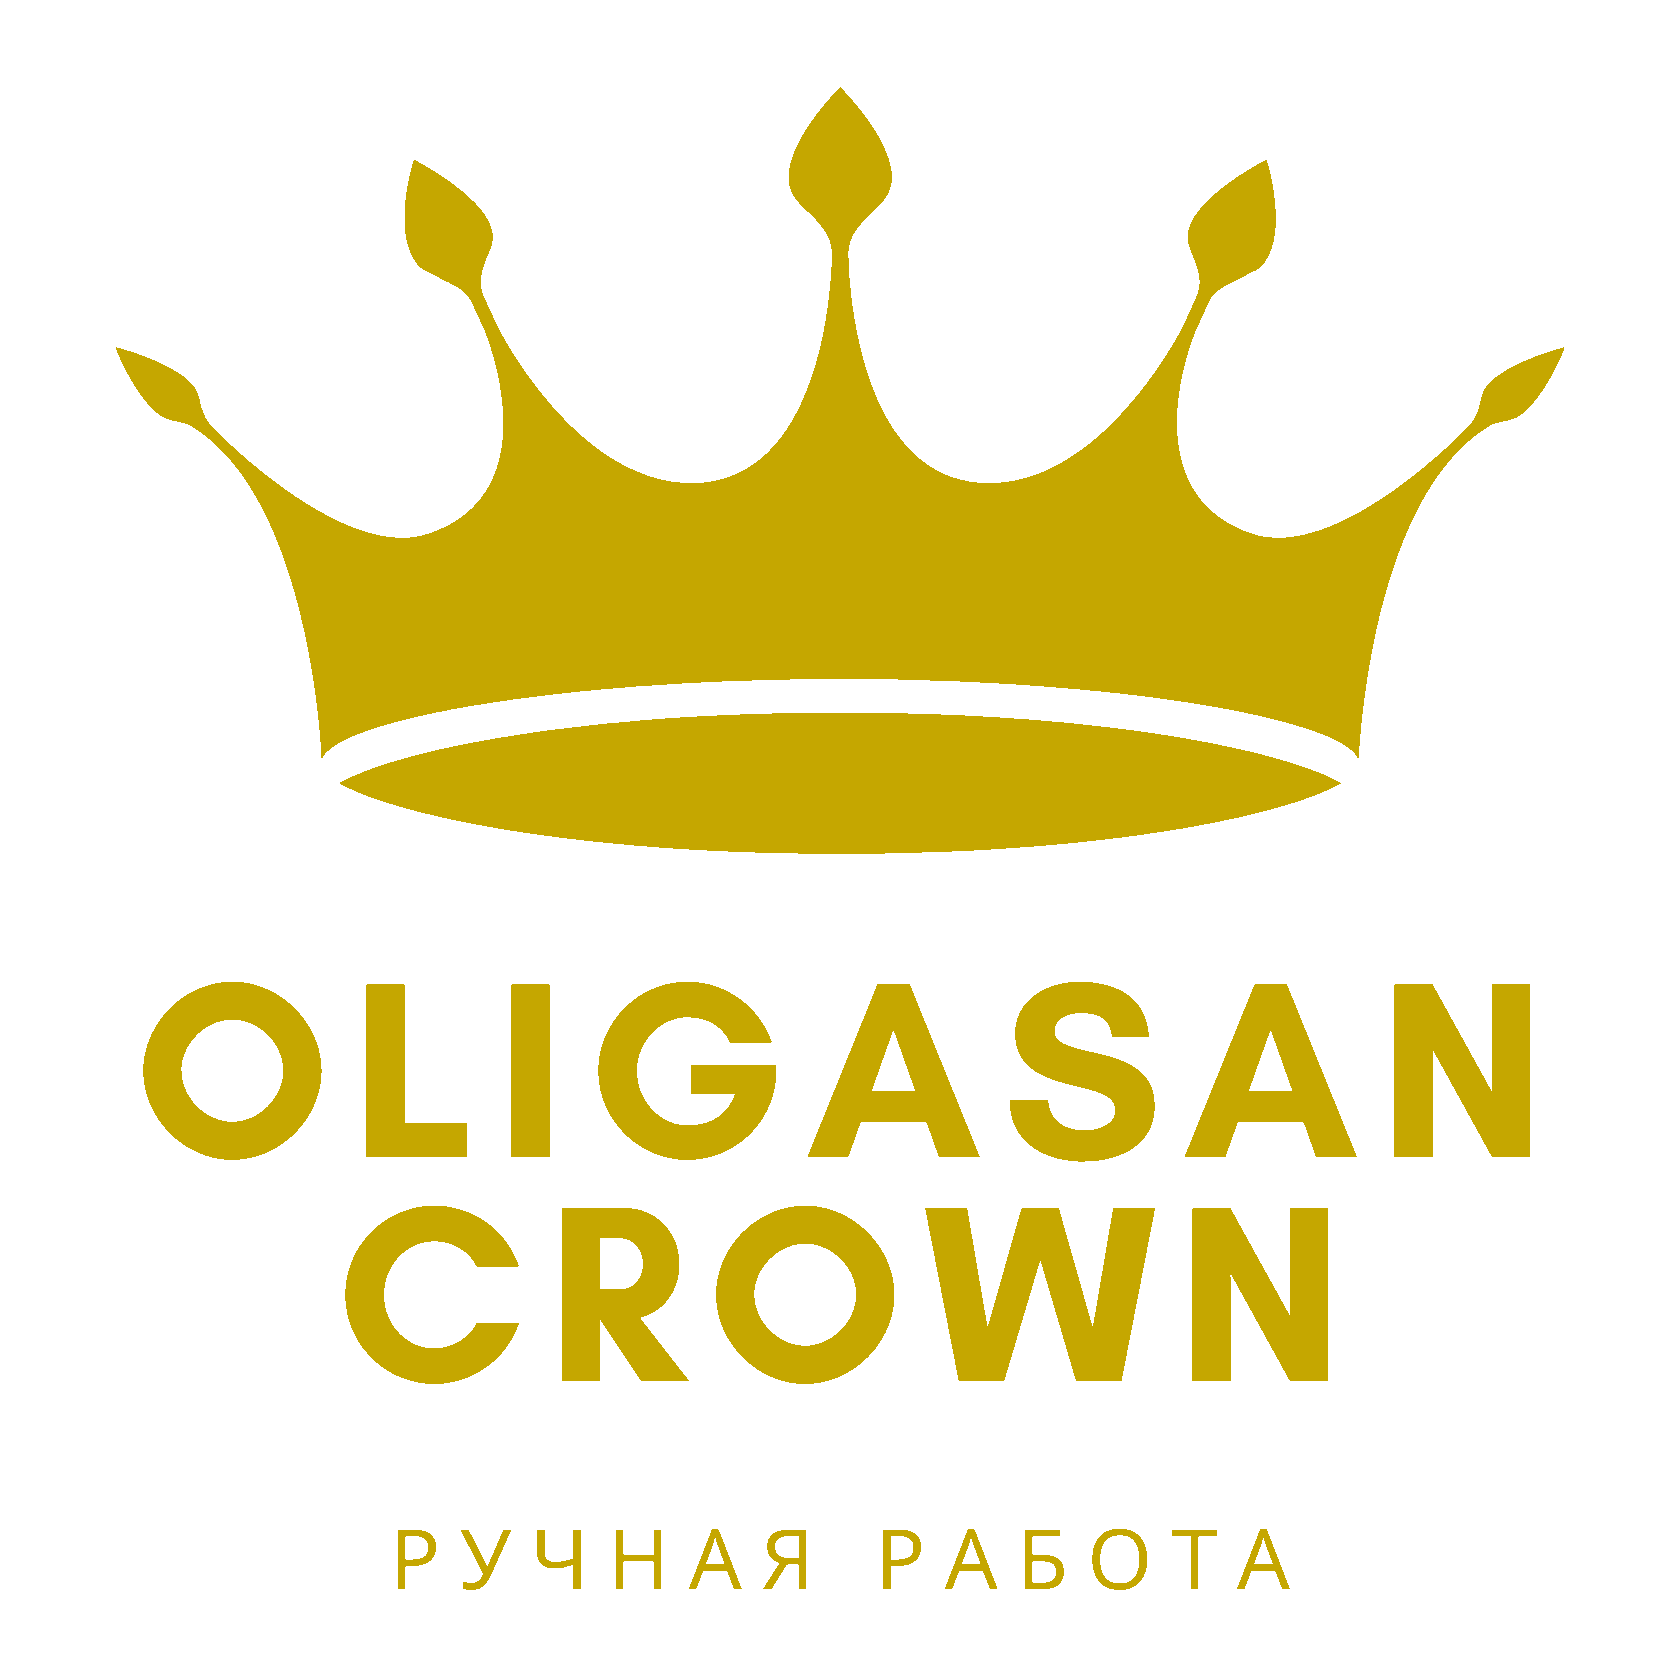 Oligasan Crown : Brand Short Description Type Here.